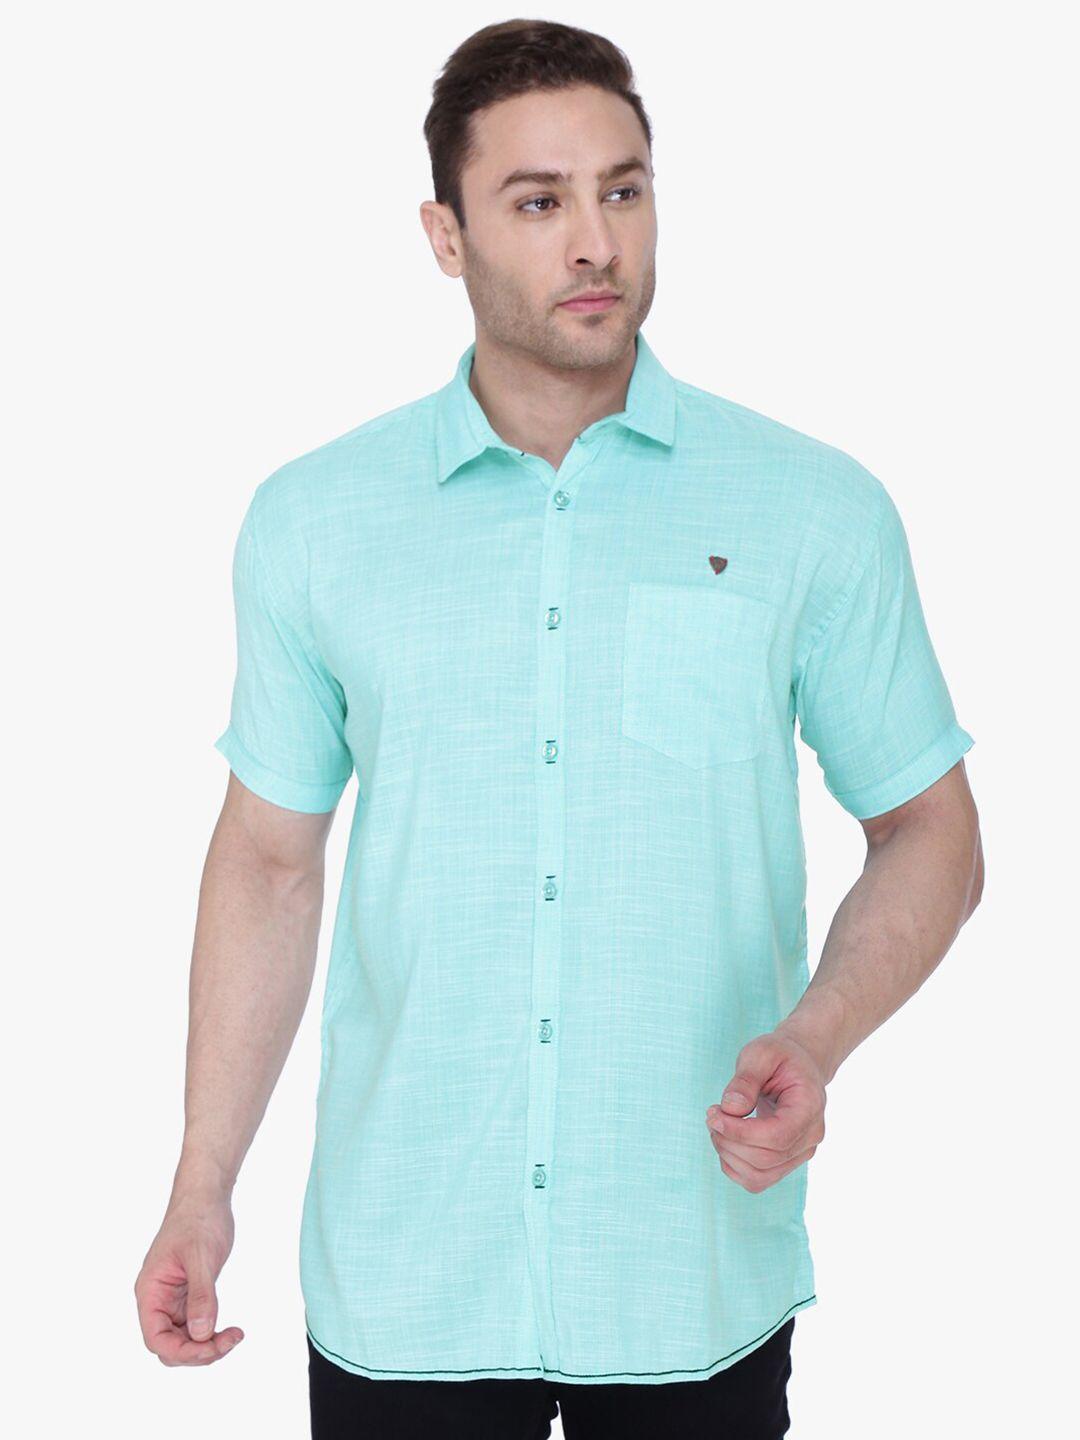 kuons-avenue-smart-slim-fit-spread-collar-pocket-casual-shirt